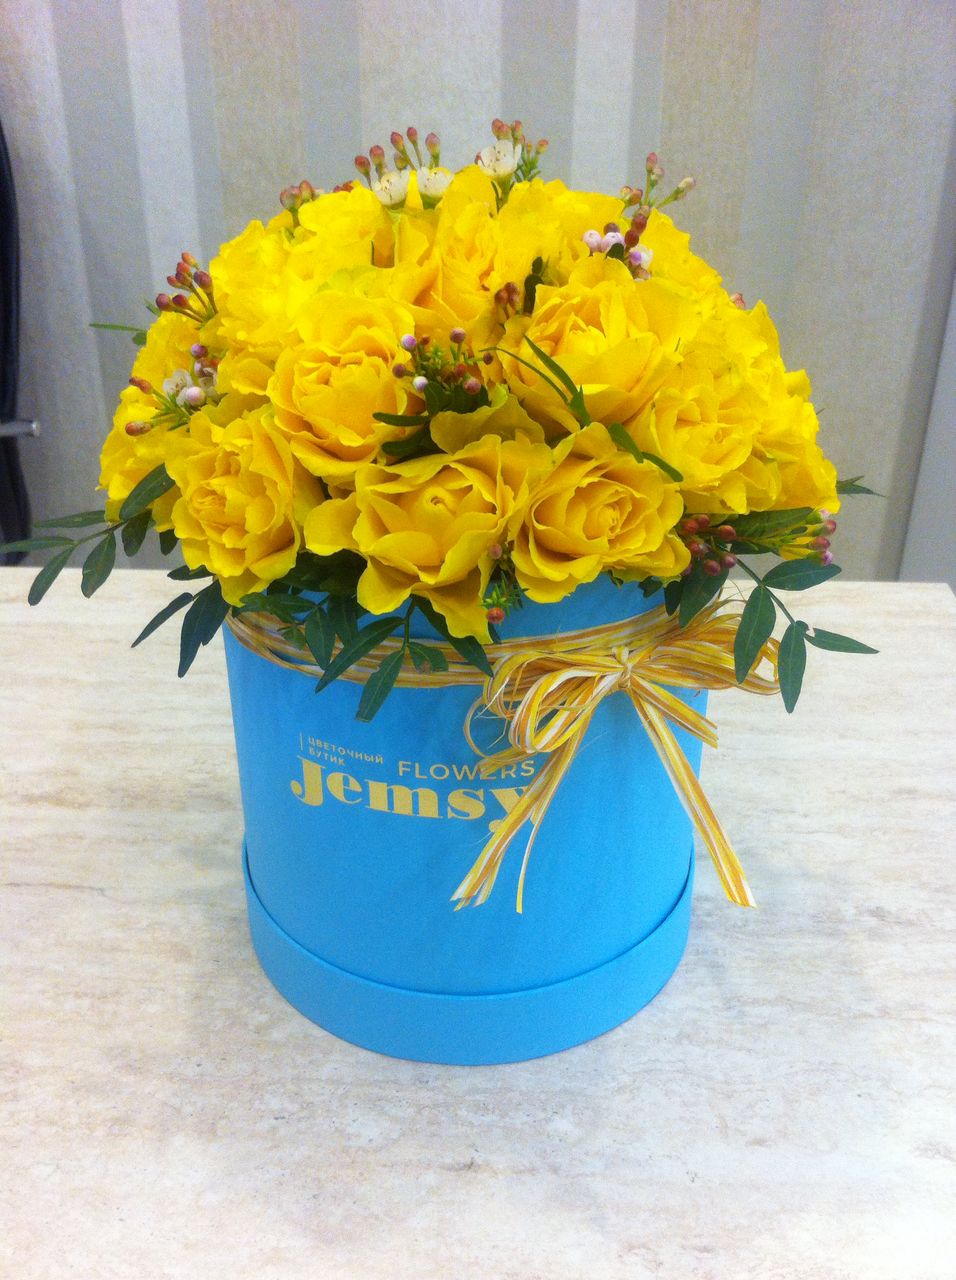 Jemsy Flowers – афиша